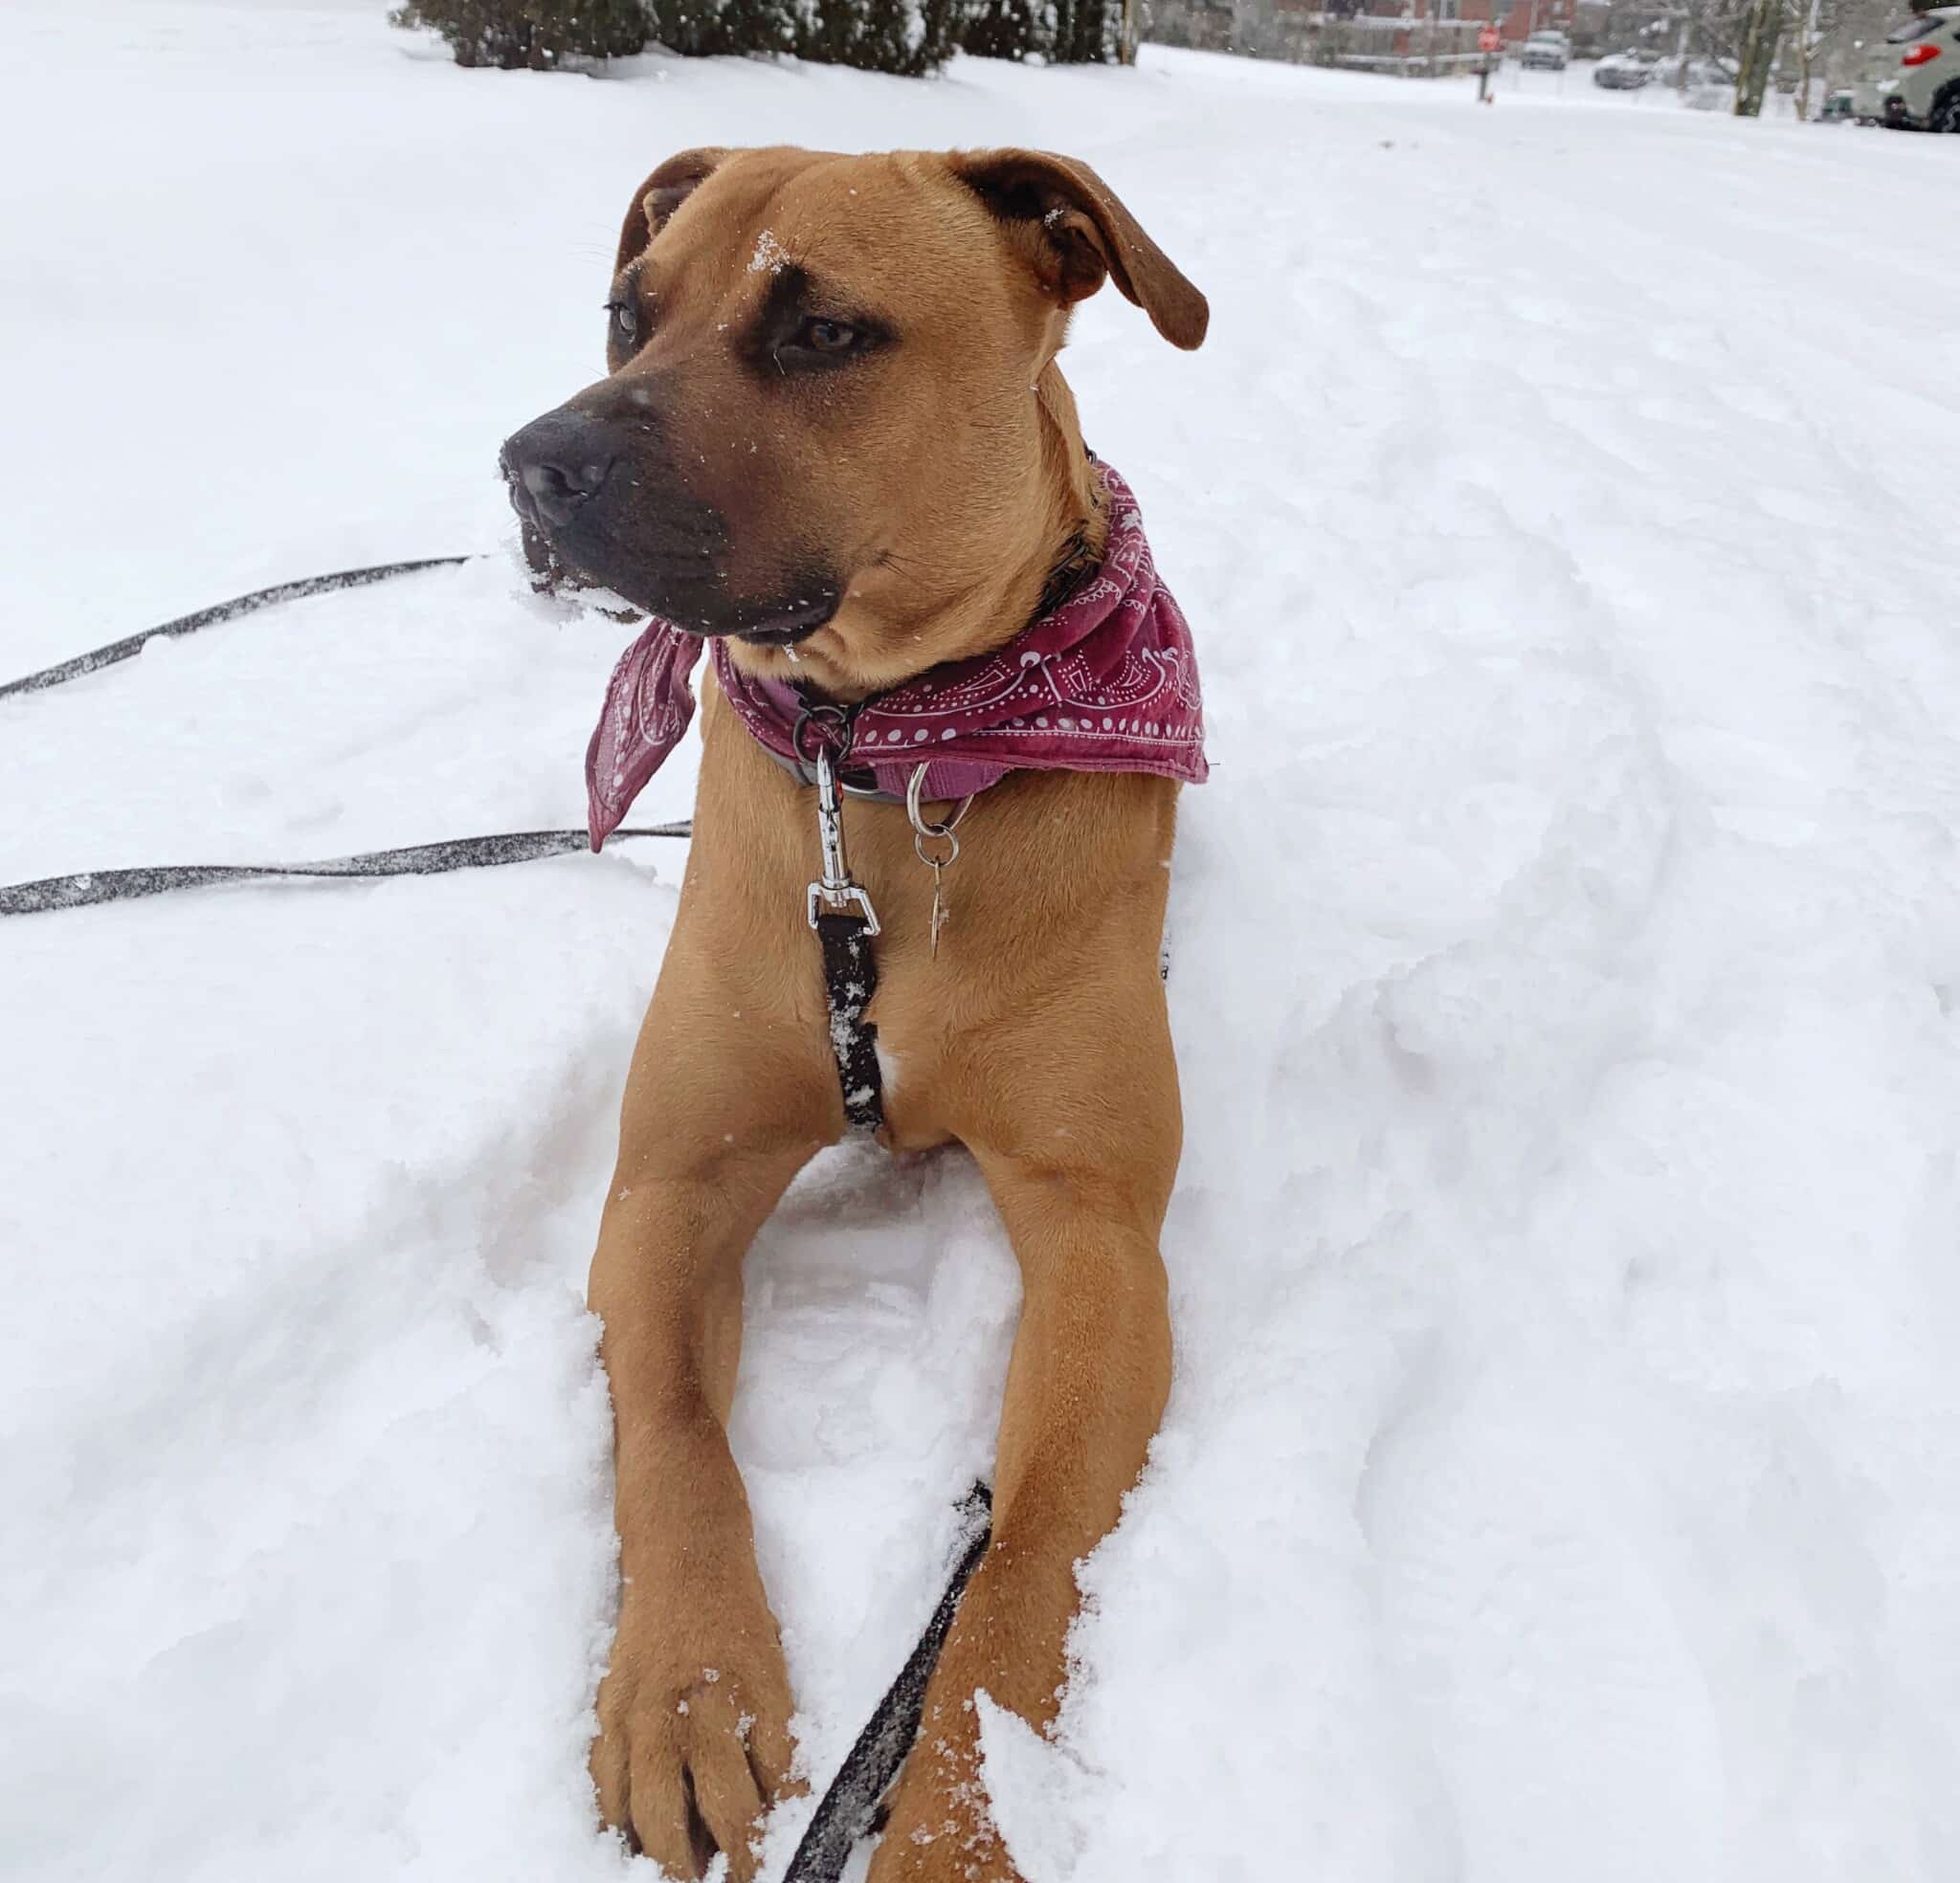 Medium brown dog in the snow.